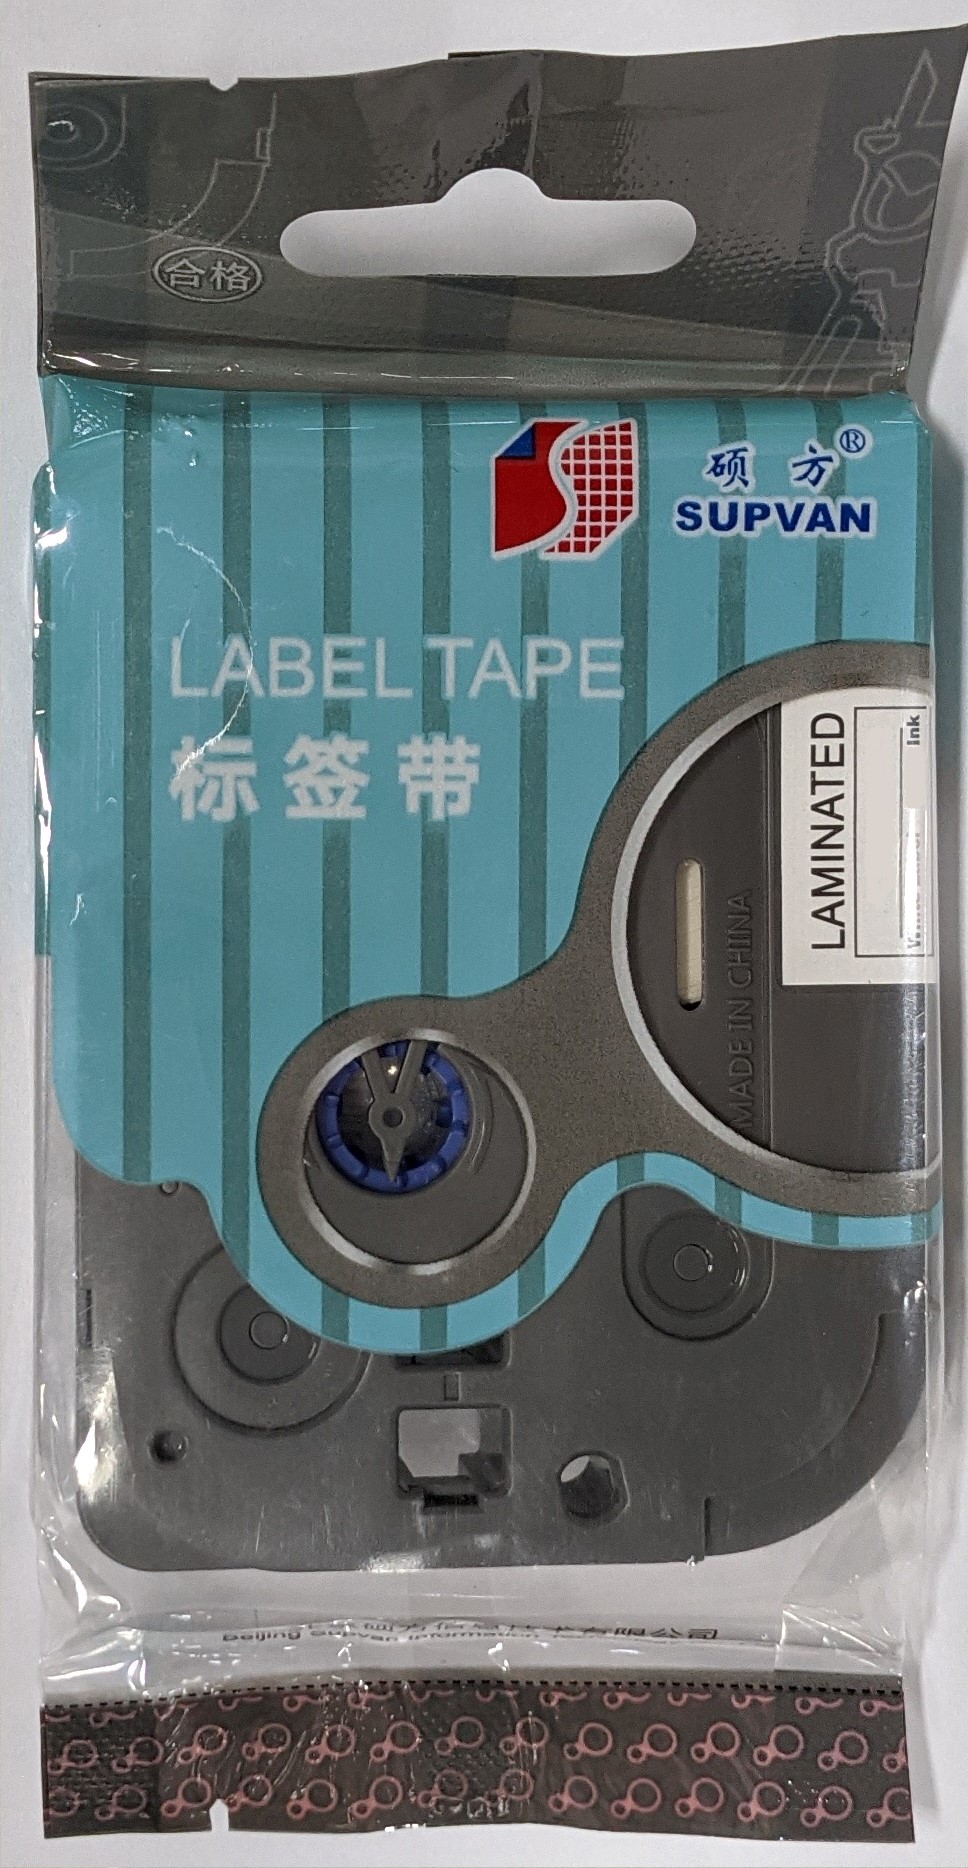 Samolepicí páska Supvan L-621E, 9mm x 8m, černý tisk / žlutý podklad, laminovaná